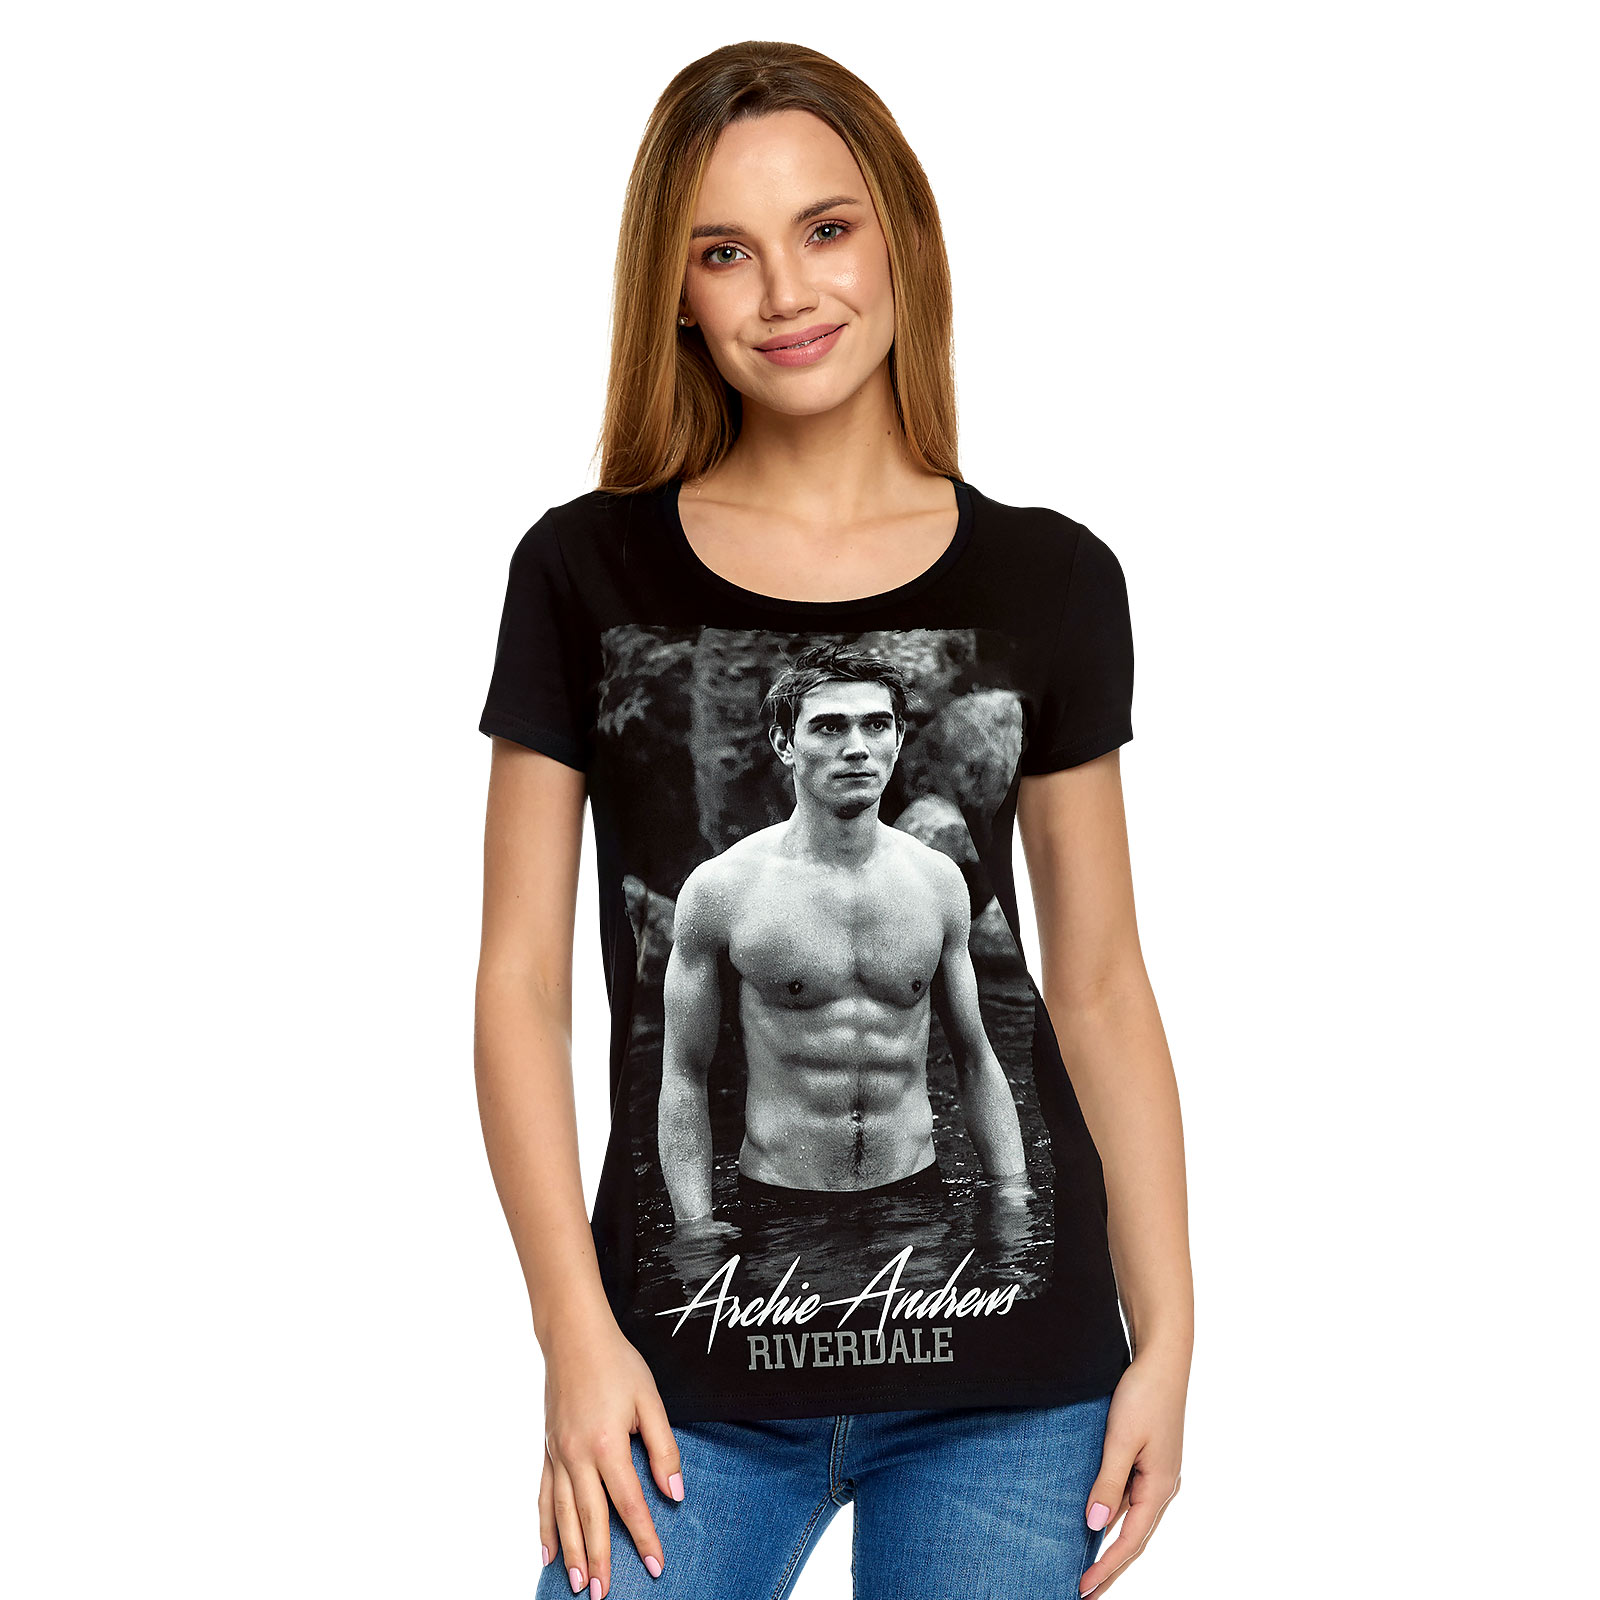 Riverdale - Archie Andrews T-Shirt Damen schwarz